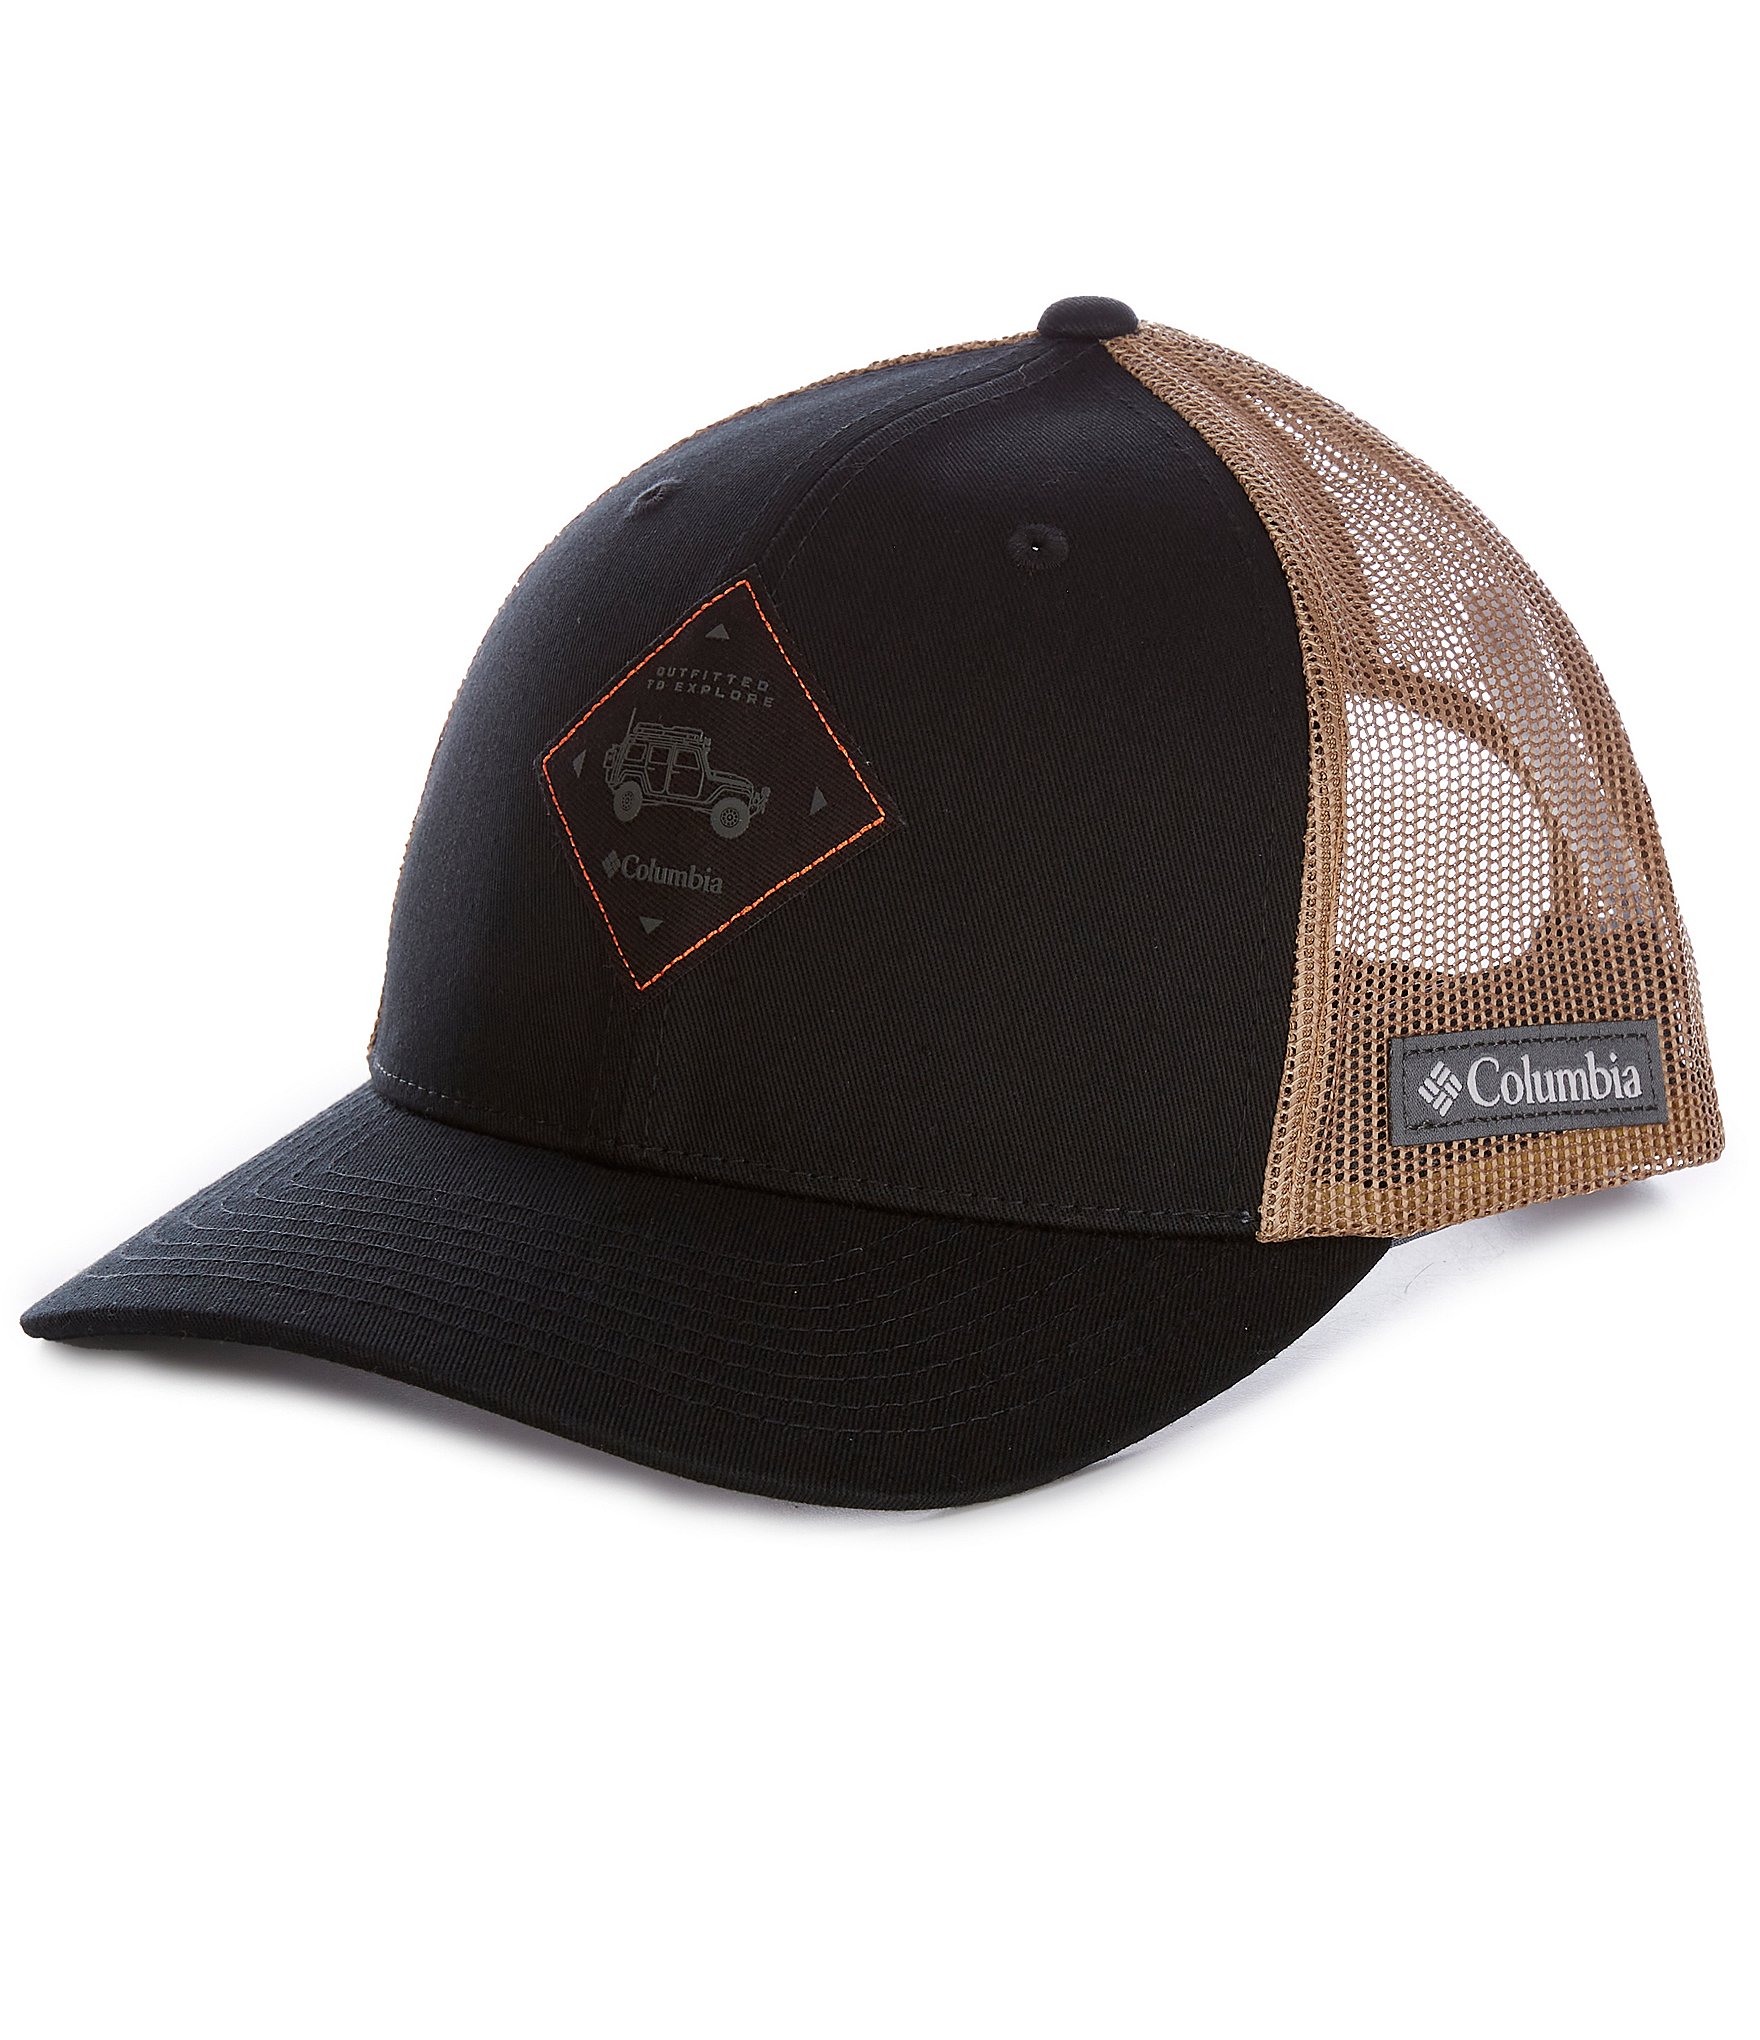 Columbia PFG Mesh Overlander Snap Back Hat - One Size